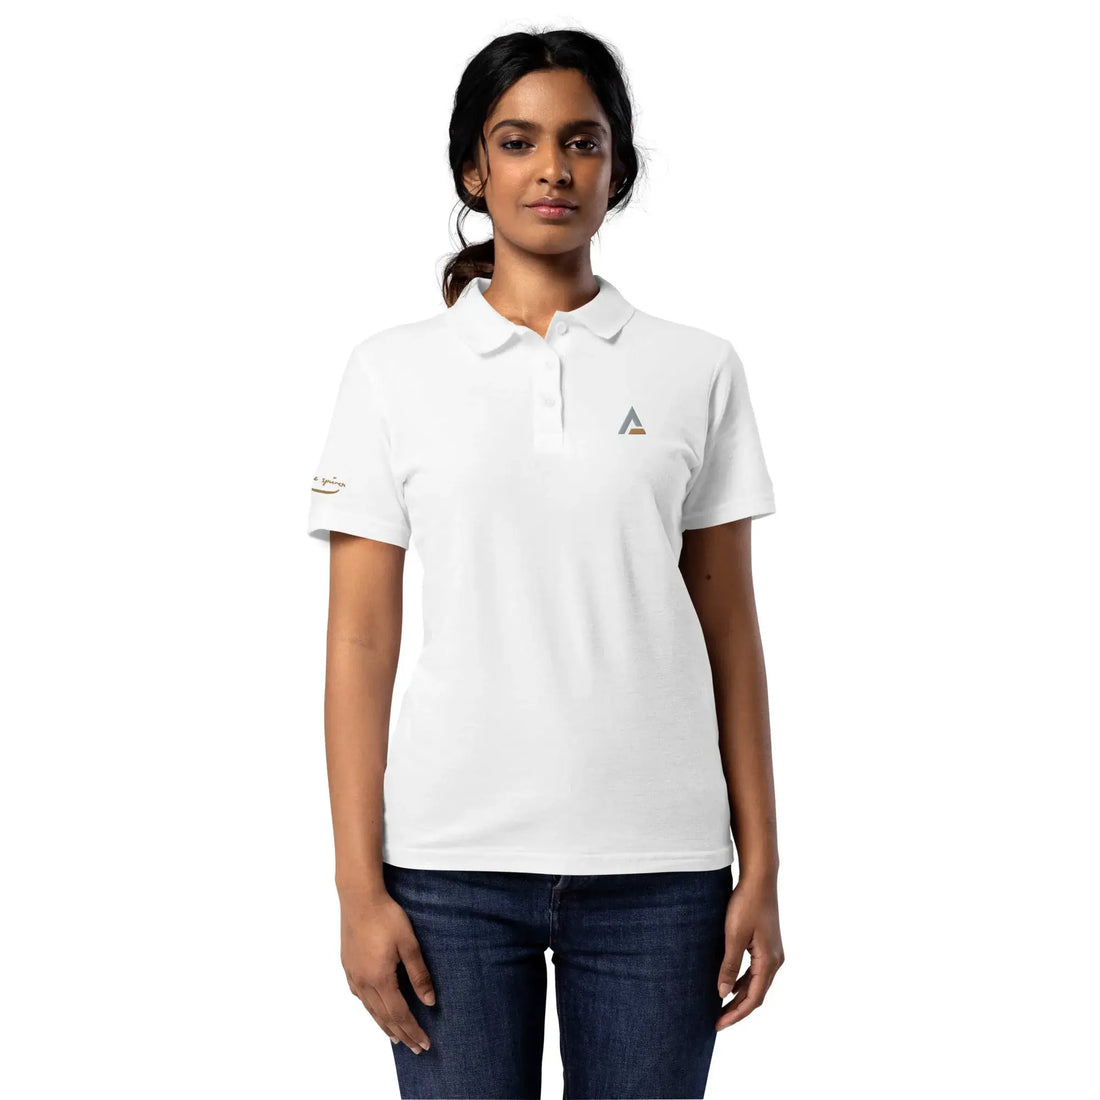 Damen Poloshirt AAA (Weiß), Polo Shirt, Time Of Vibes